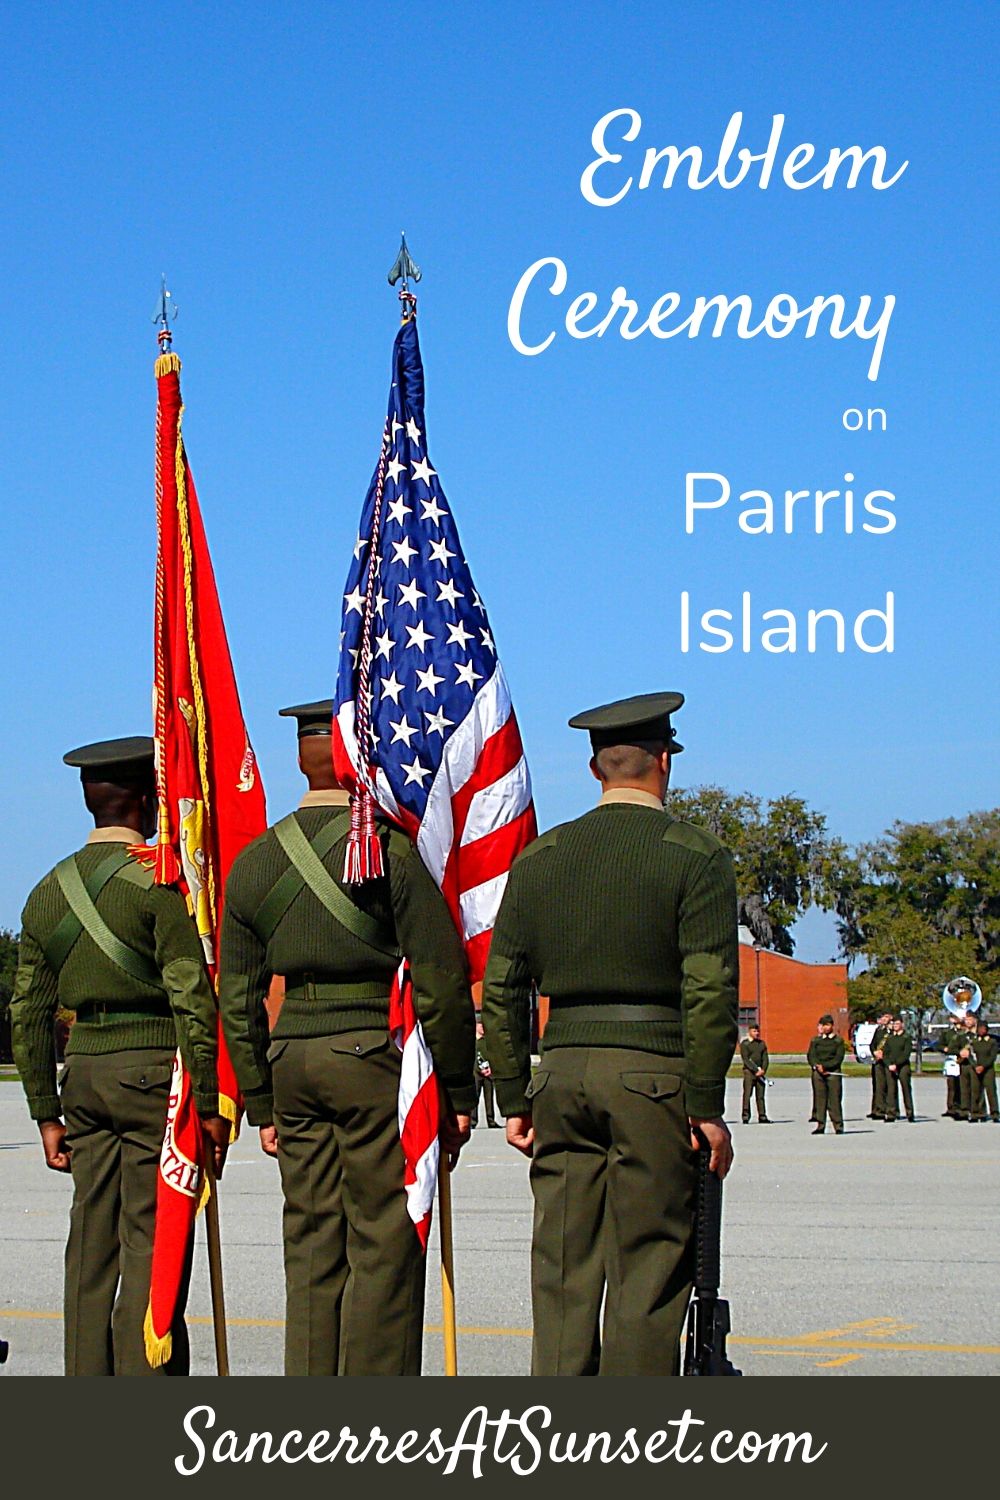 Emblem Ceremony on Parris Island